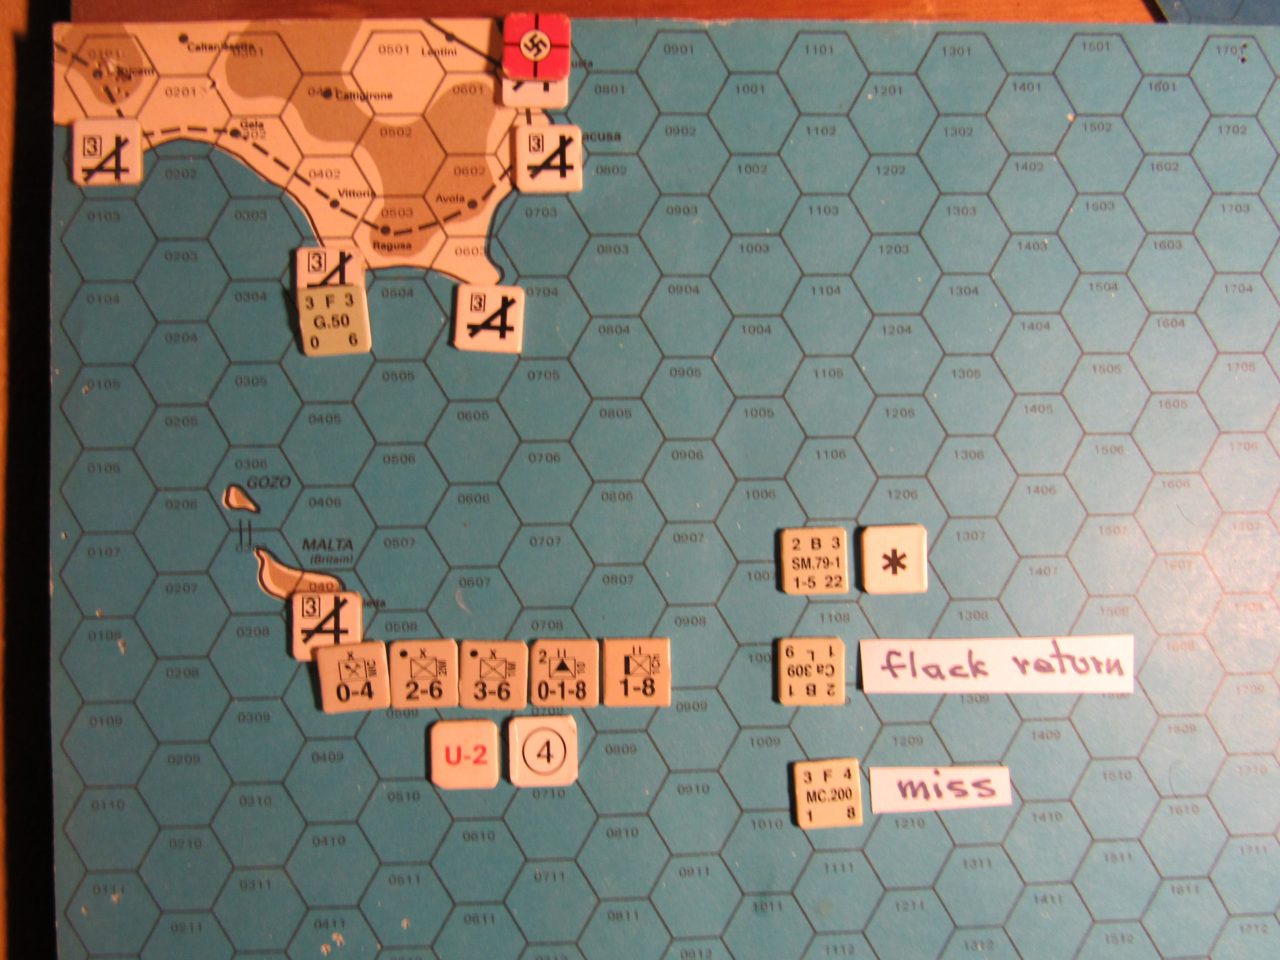 ME/ER-II Apr I 41 beginning of M. Phase air attack against Malta Status, prior to naval movement segment